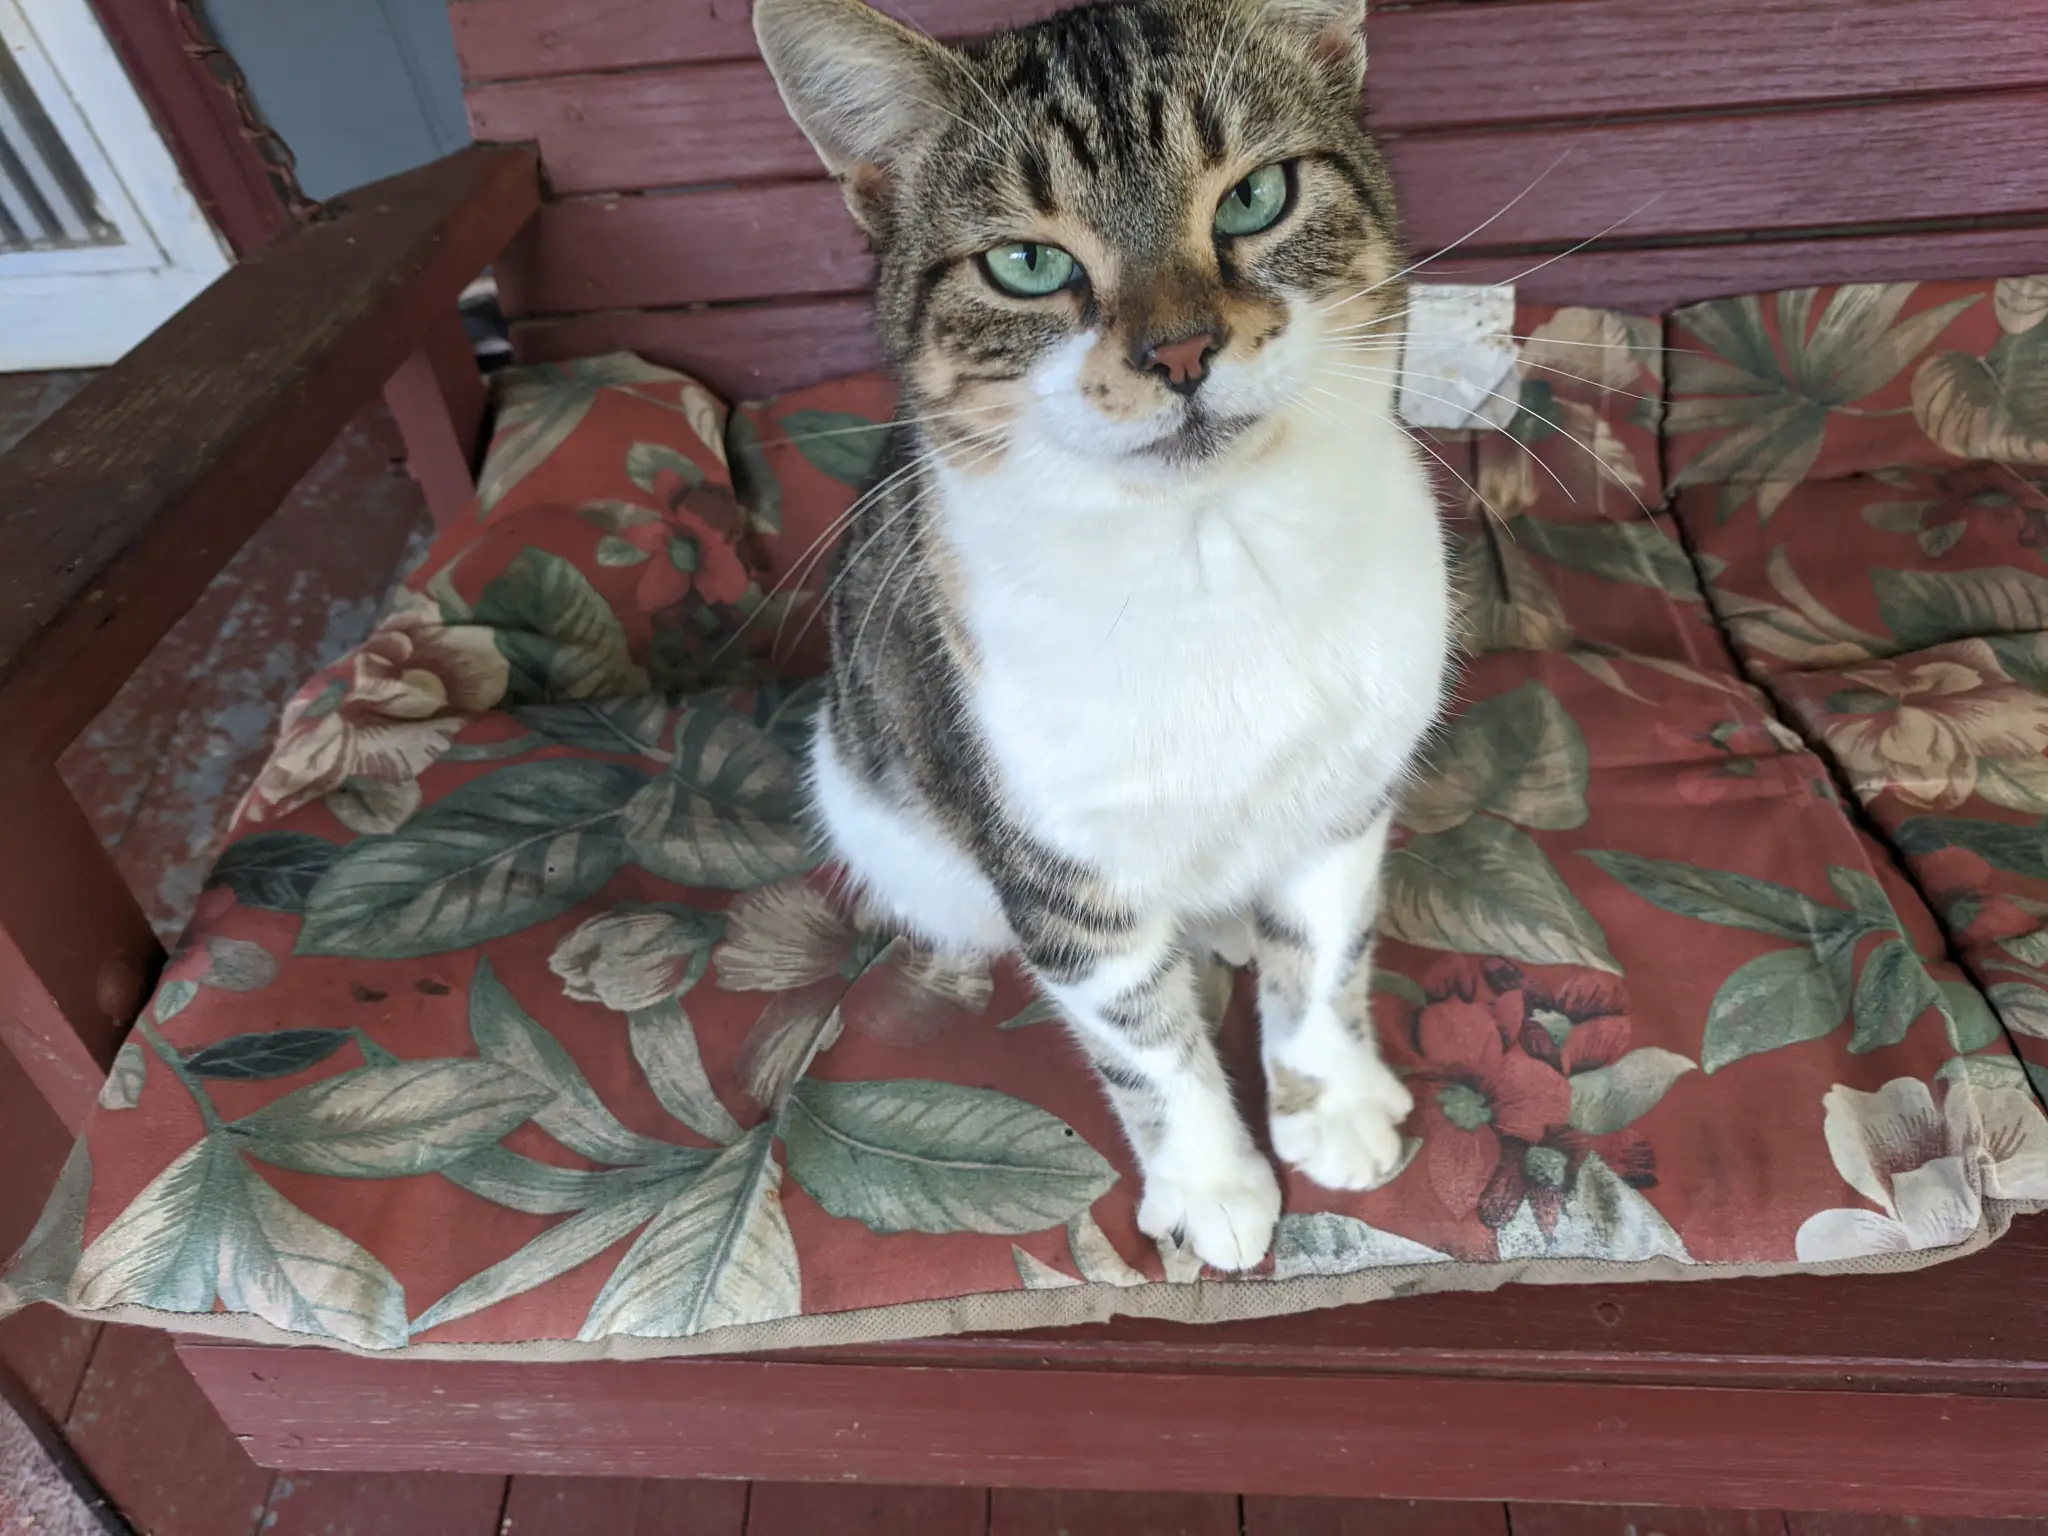 Cat sitting on porch swing.